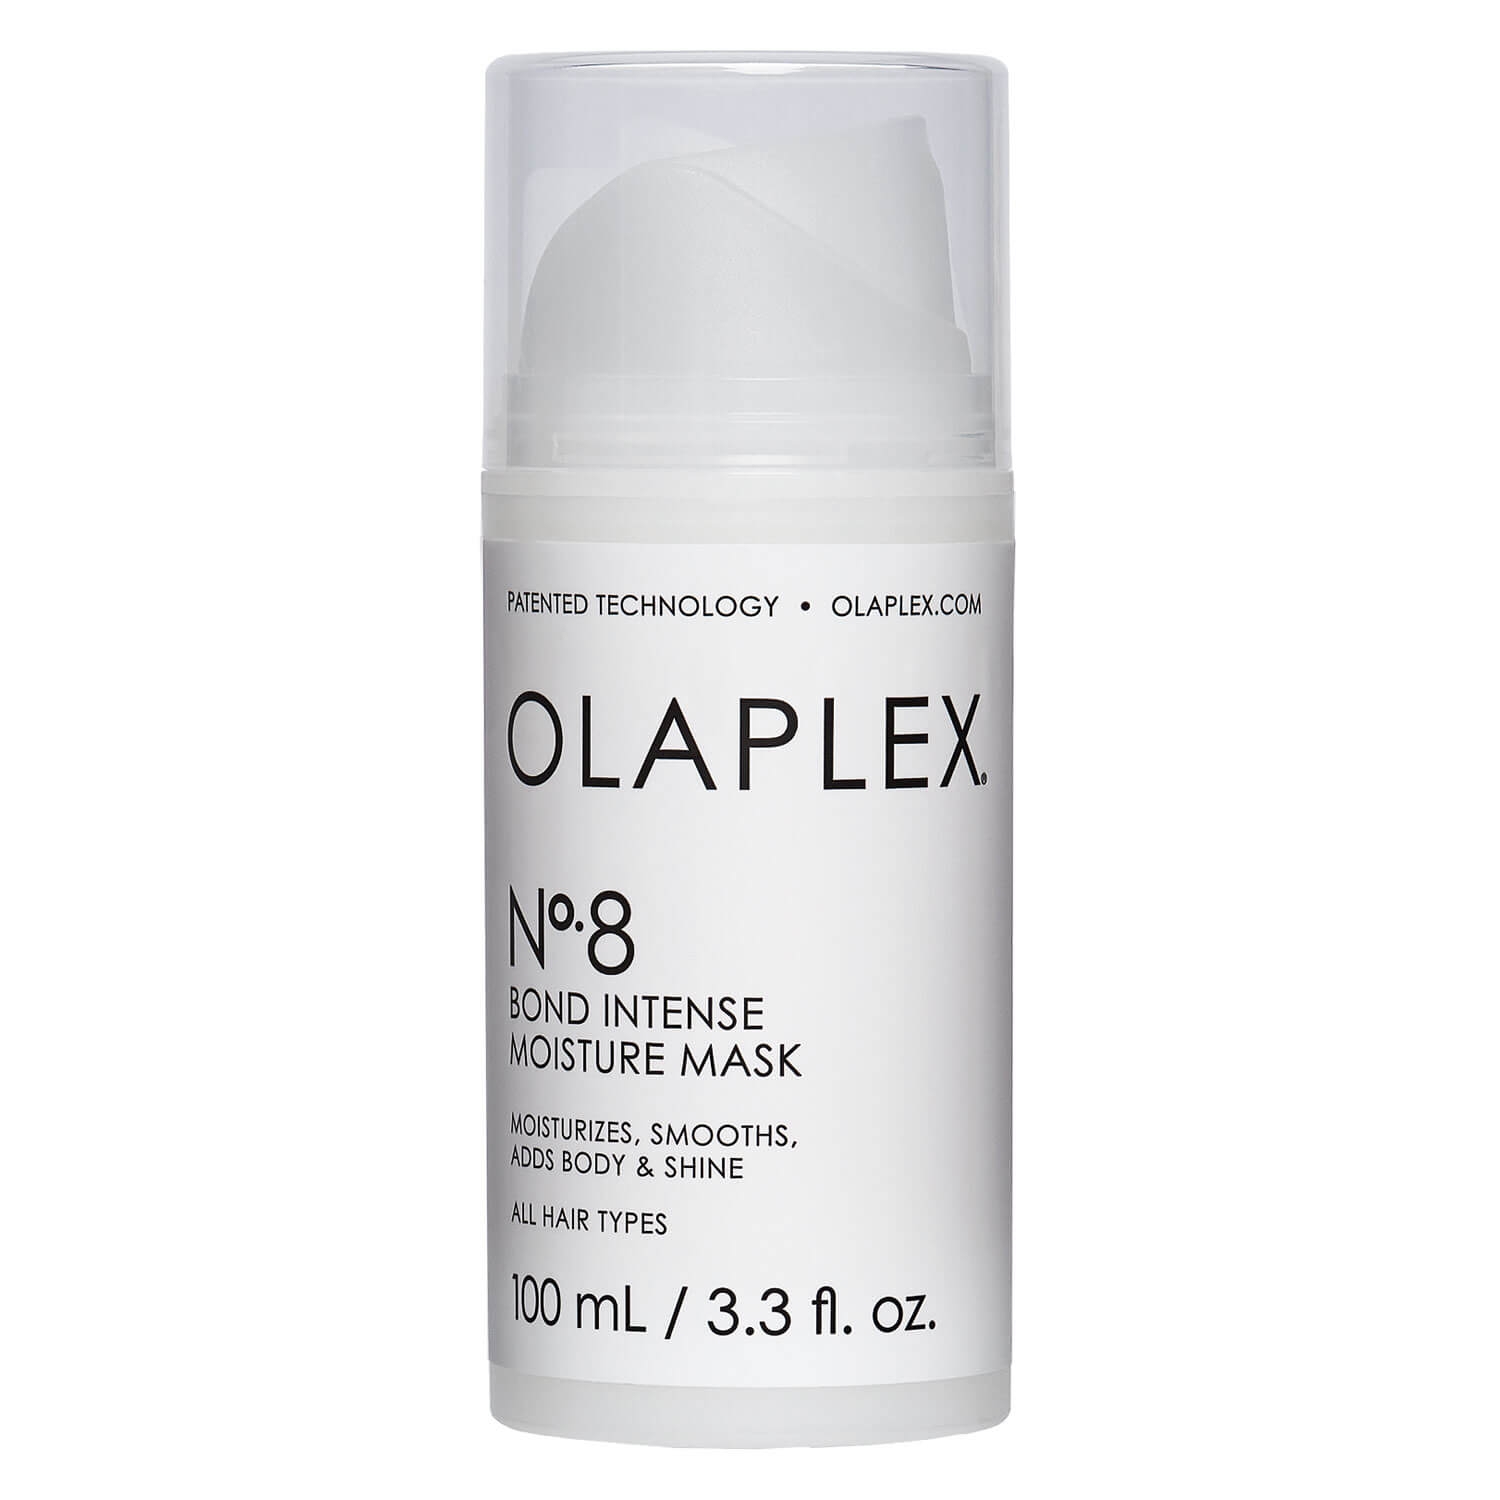 Product image from Olaplex - Bond Intense Moisture Mask No. 8